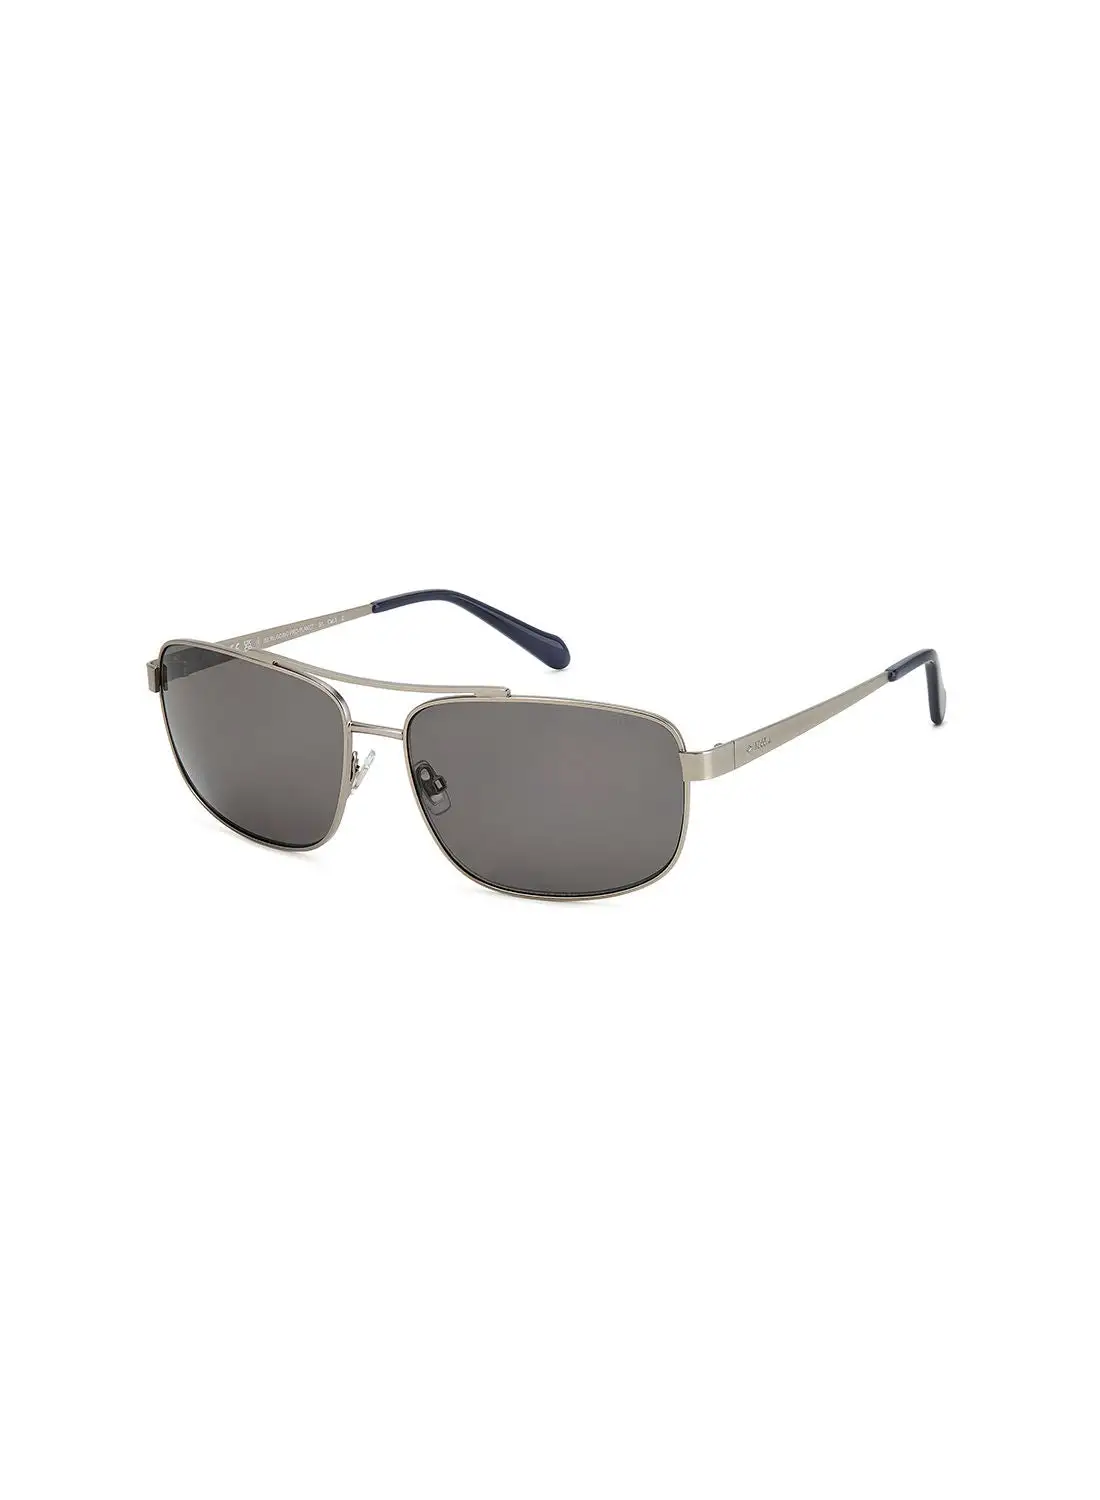 FOSSIL Men's UV Protection Rectangular Sunglasses - Fos 2130/G/S Mt Ruthen 61 - Lens Size: 61 Mm